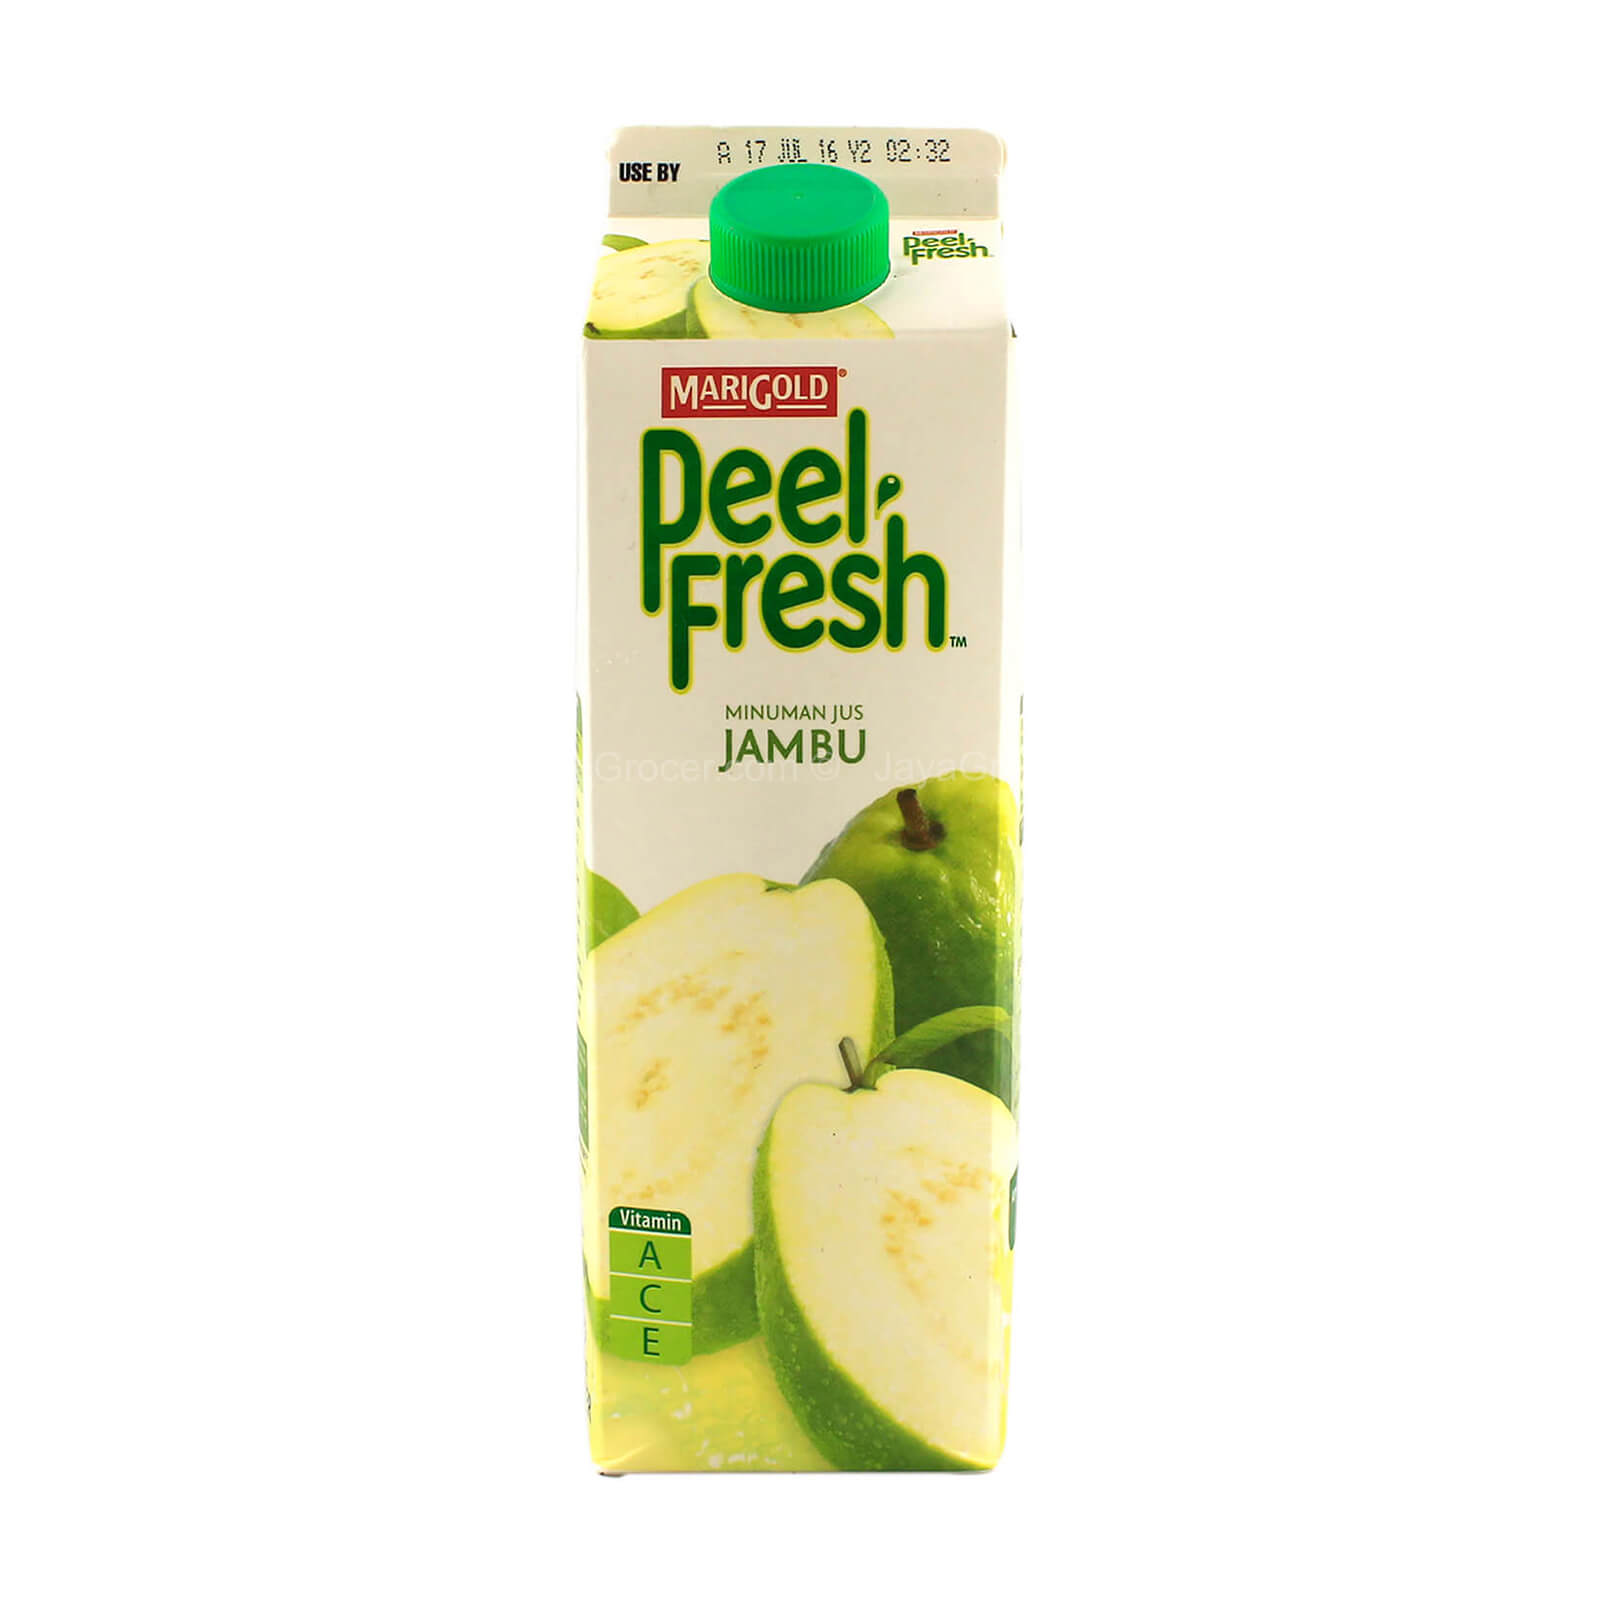 Marigold Peel Fresh Guava Juice Drink | JayaGrocer.com